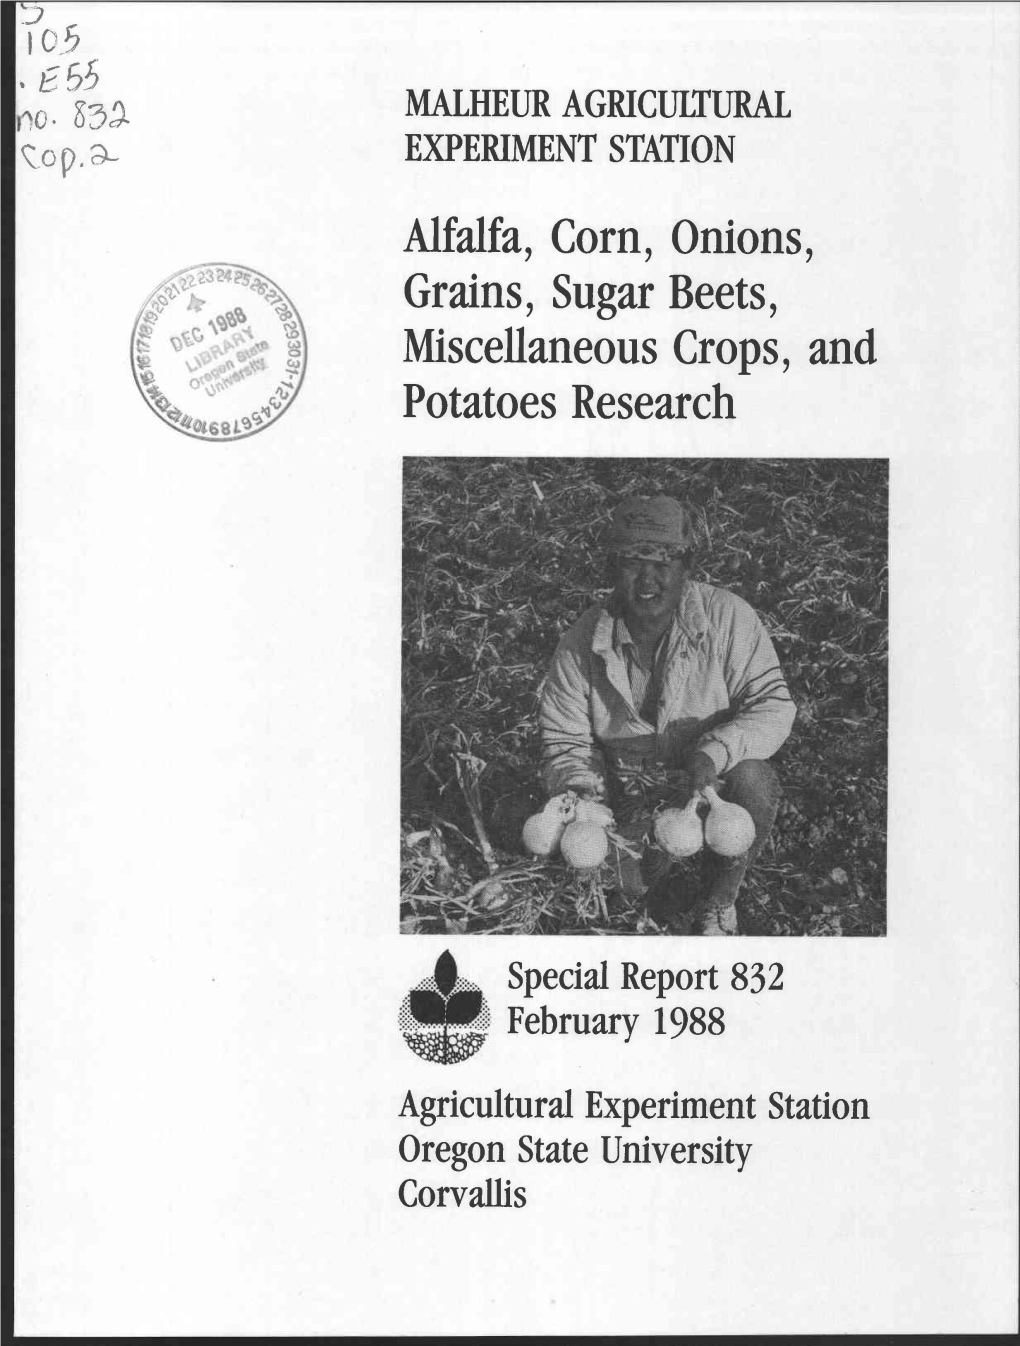 Alfalfa, Corn, Onions, Grains, Sugar Beets, Miscellaneous Crops, and Potatoes Research